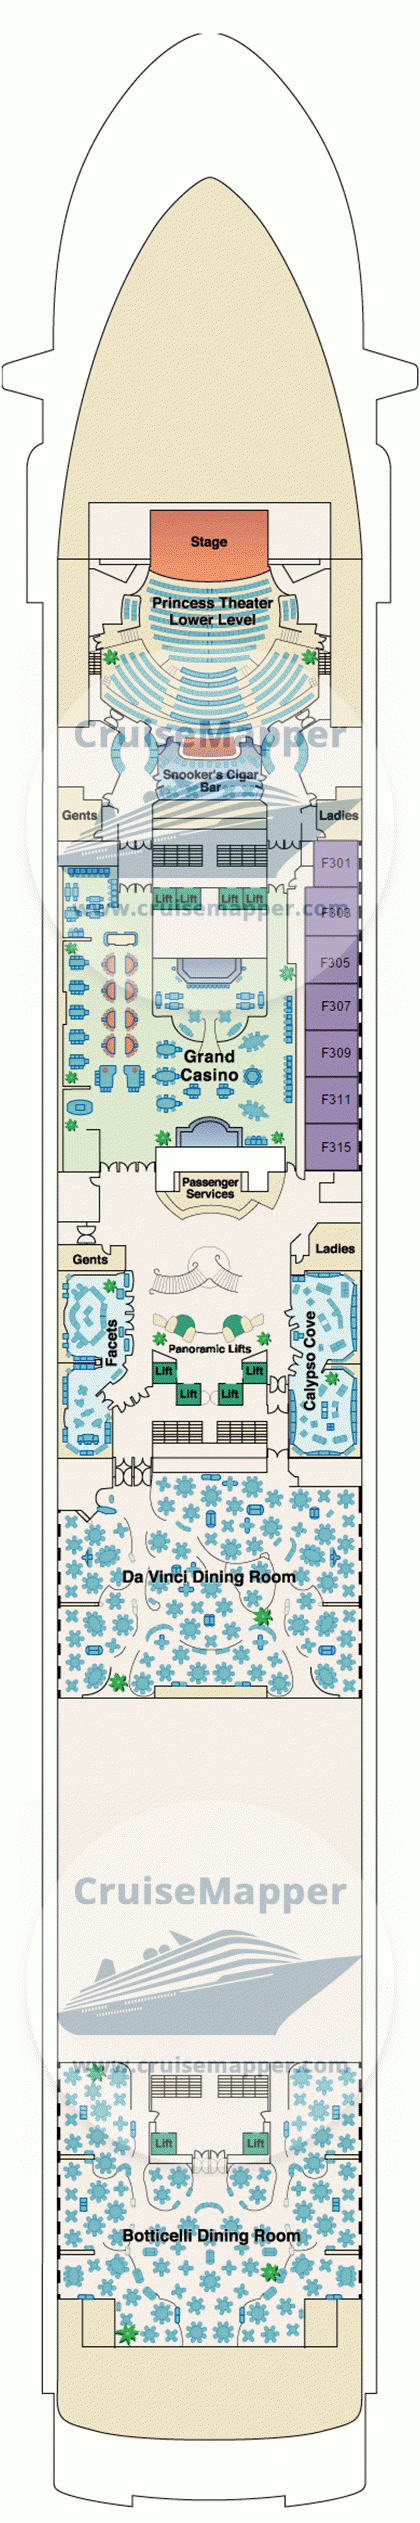 Grand Princess Deck 06 - Fiesta-Cabins-Dining-Casino-Shops